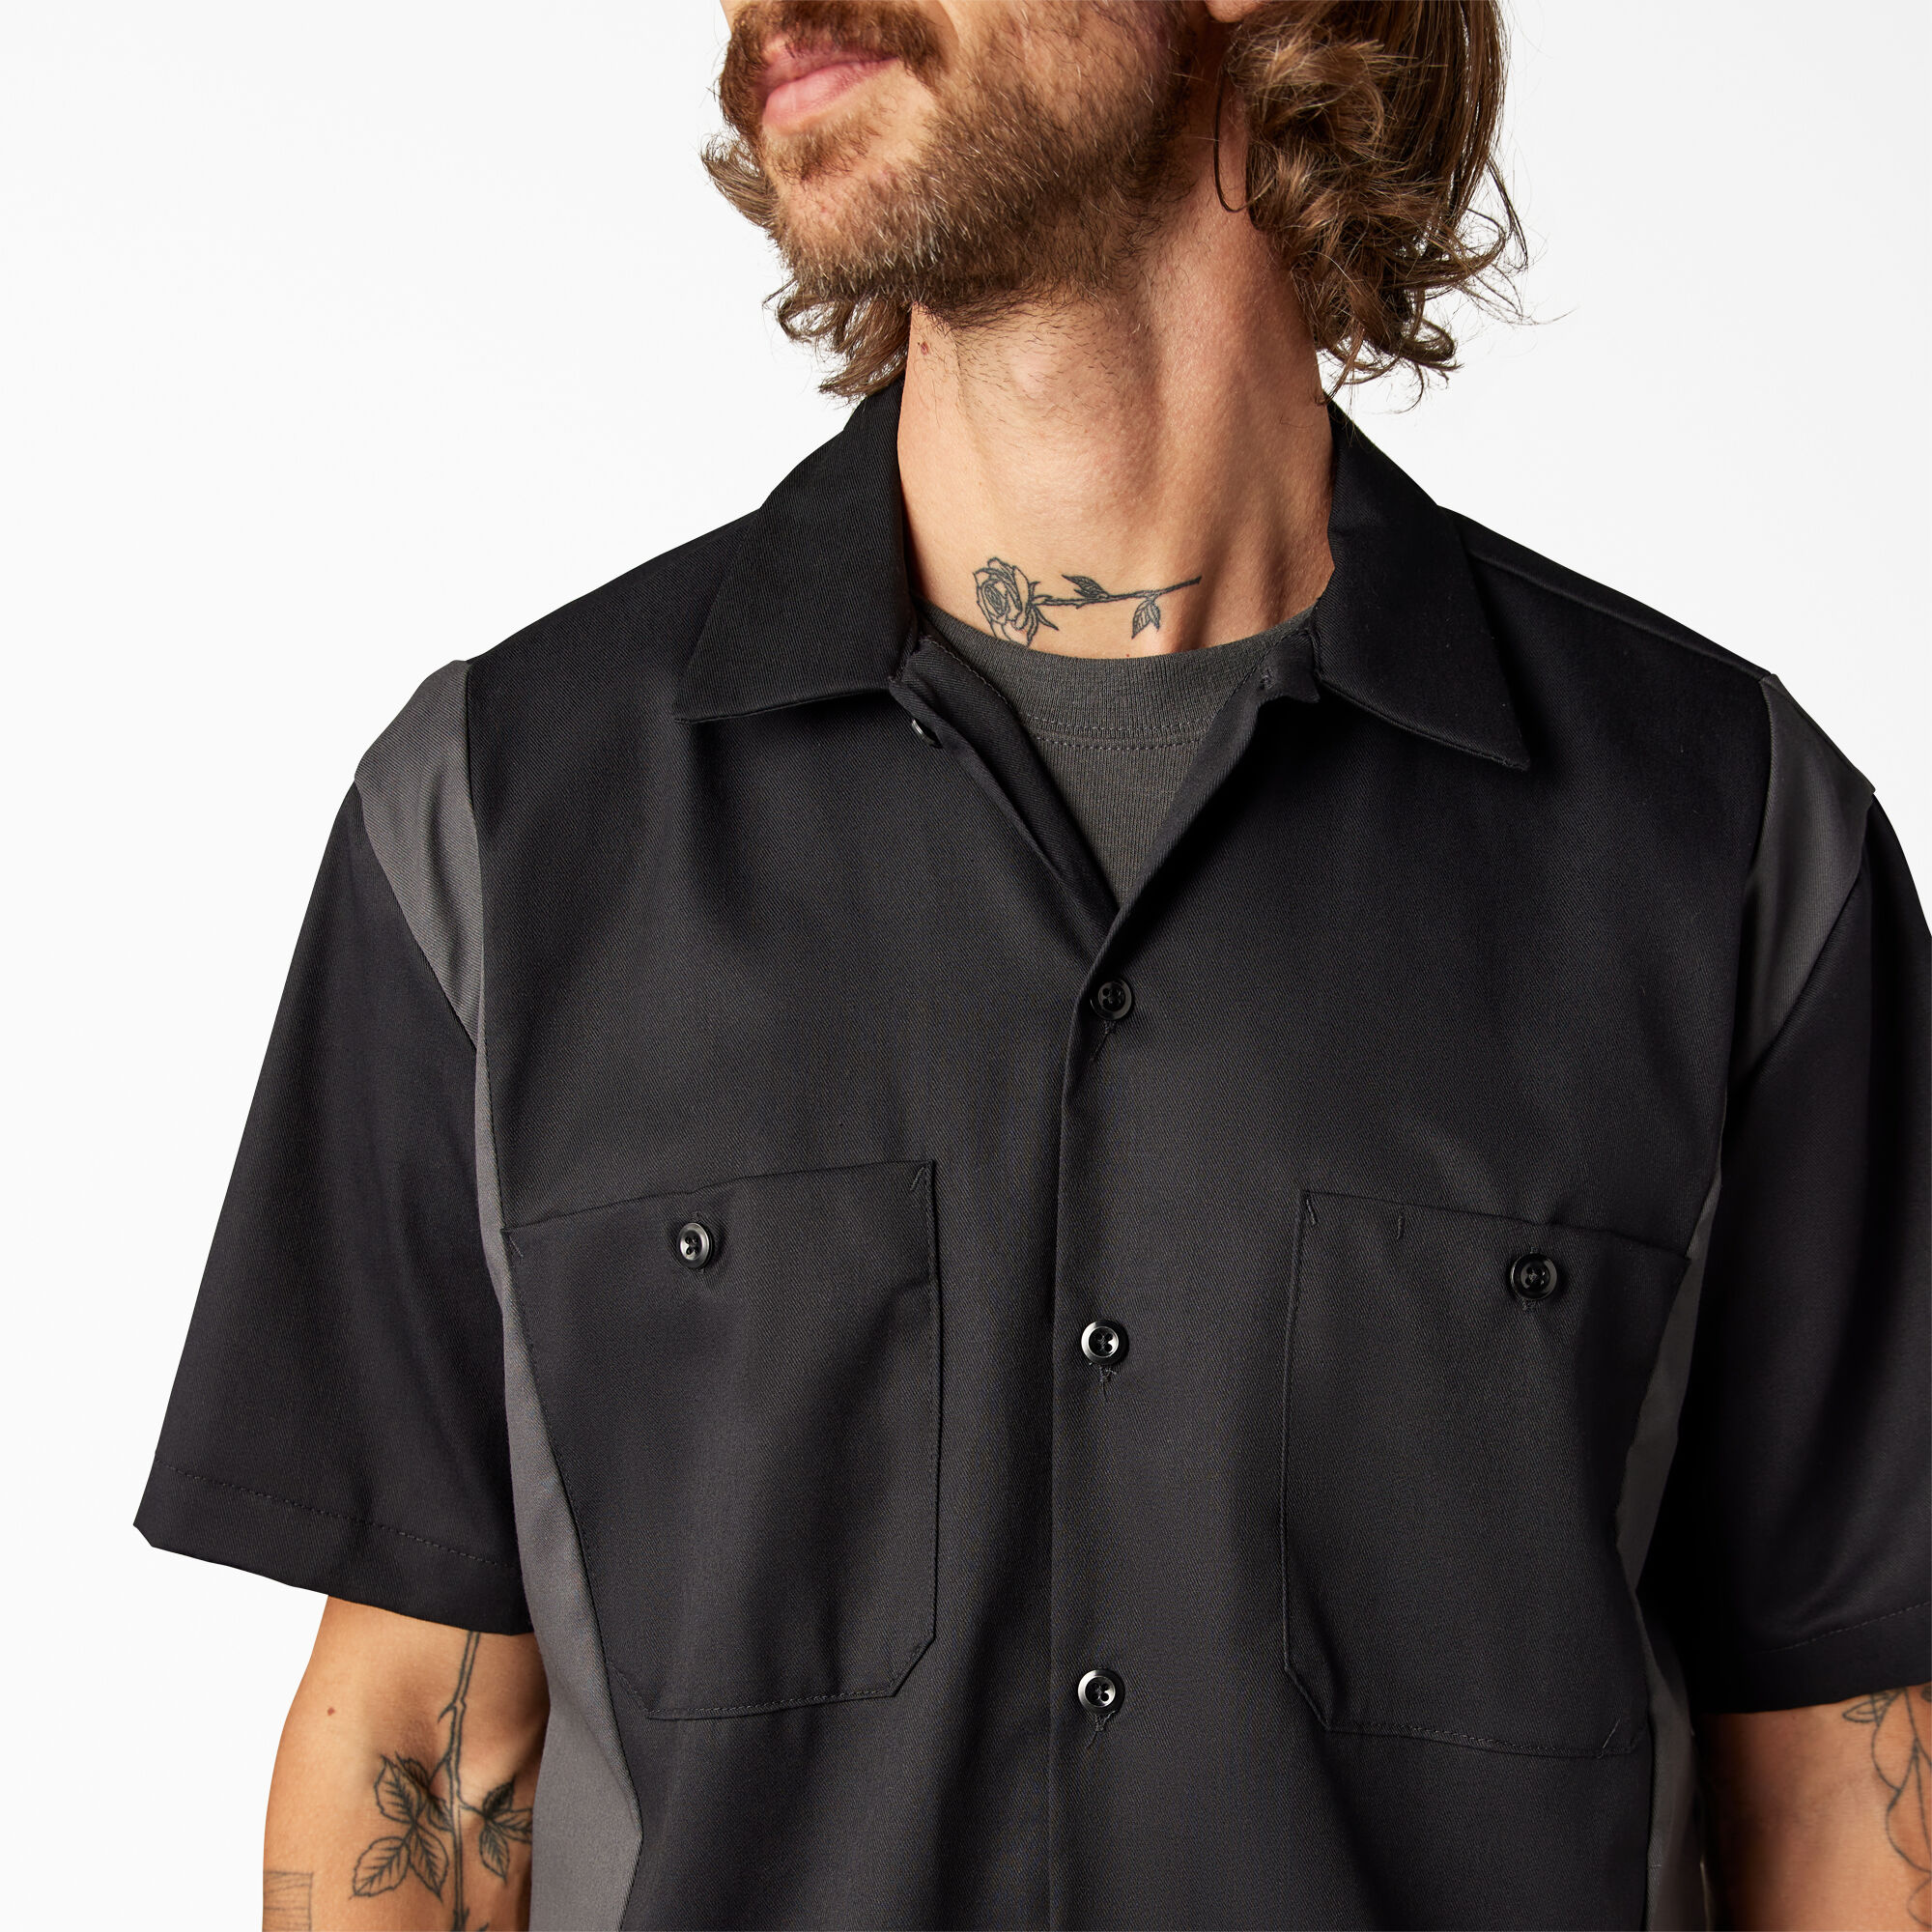 Two-Tone Short Sleeve Work Shirt | Mens Shirts | Dickies - Dickies US